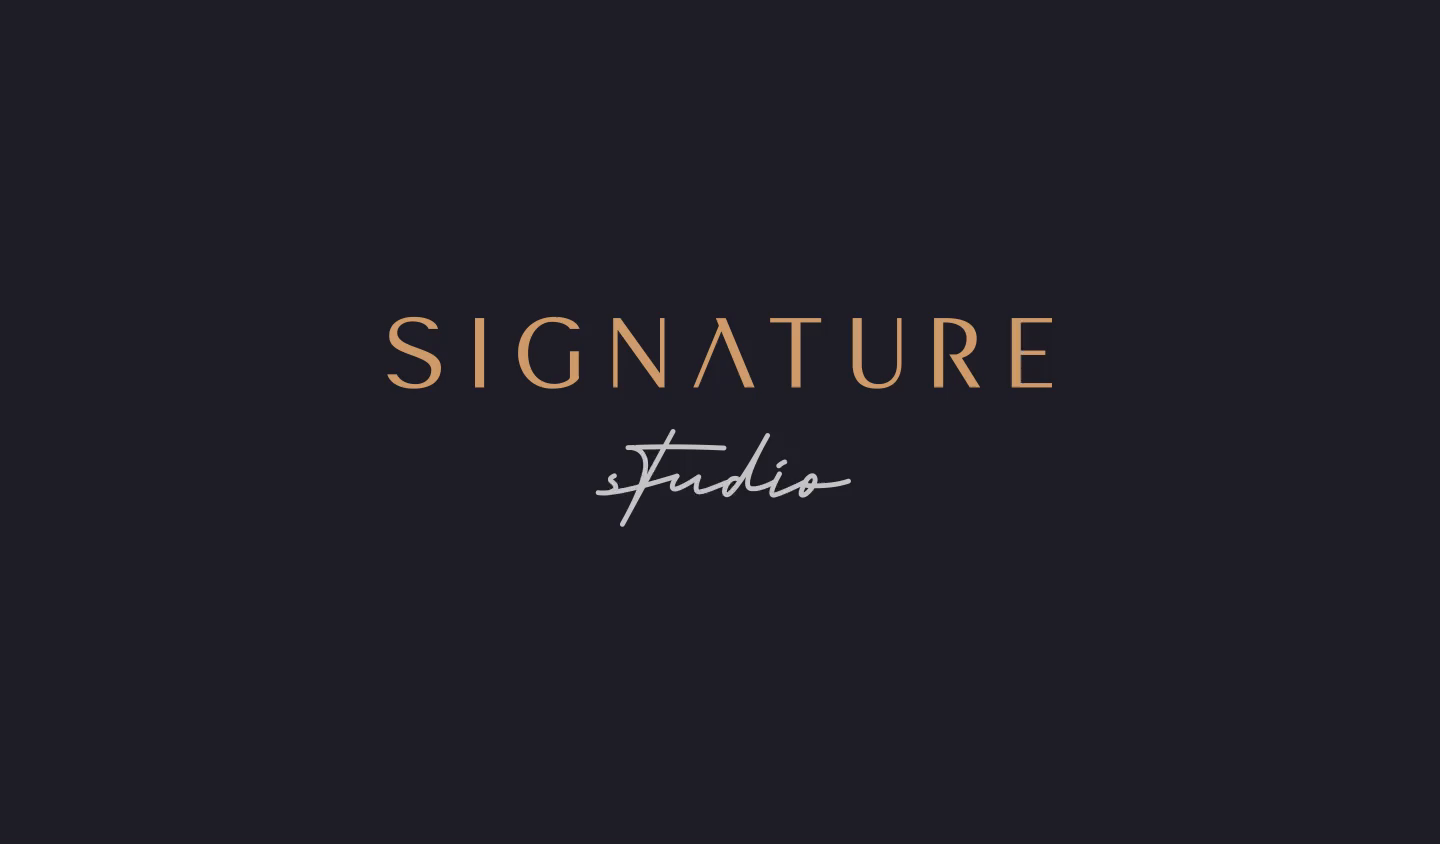 Signature Studio by Muhammad Ali Effendy on Dribbble